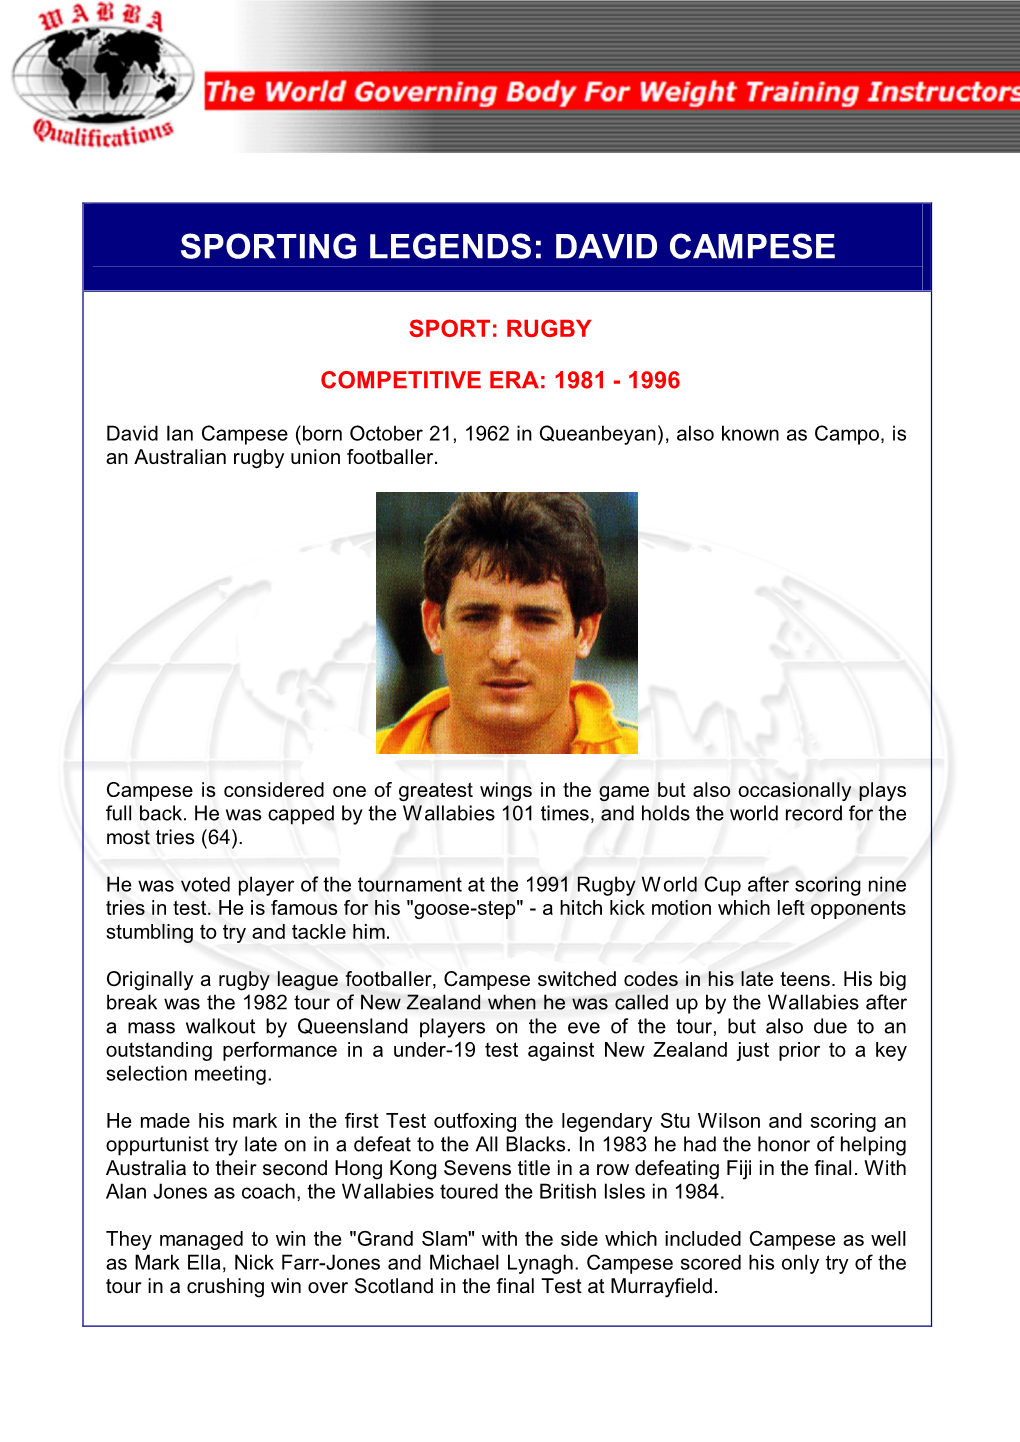 Sporting Legends: David Campese